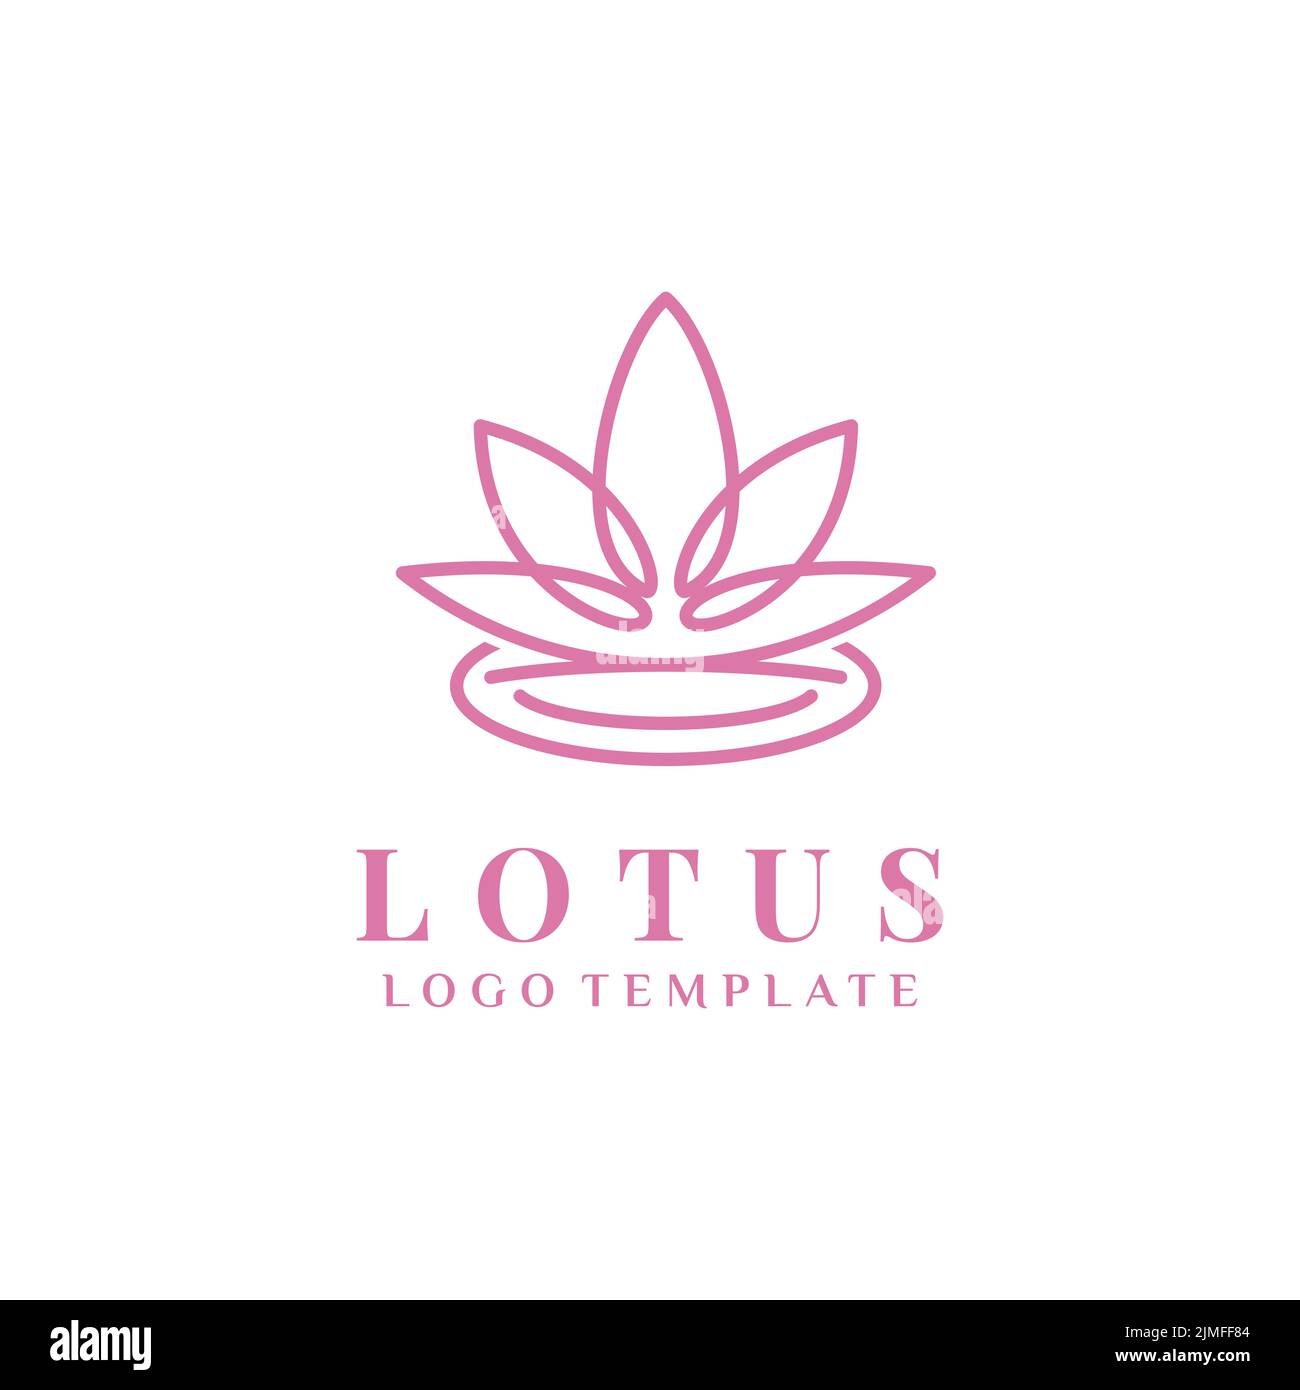 Lotus Flower logo with line art style design inspiration Stock Vector